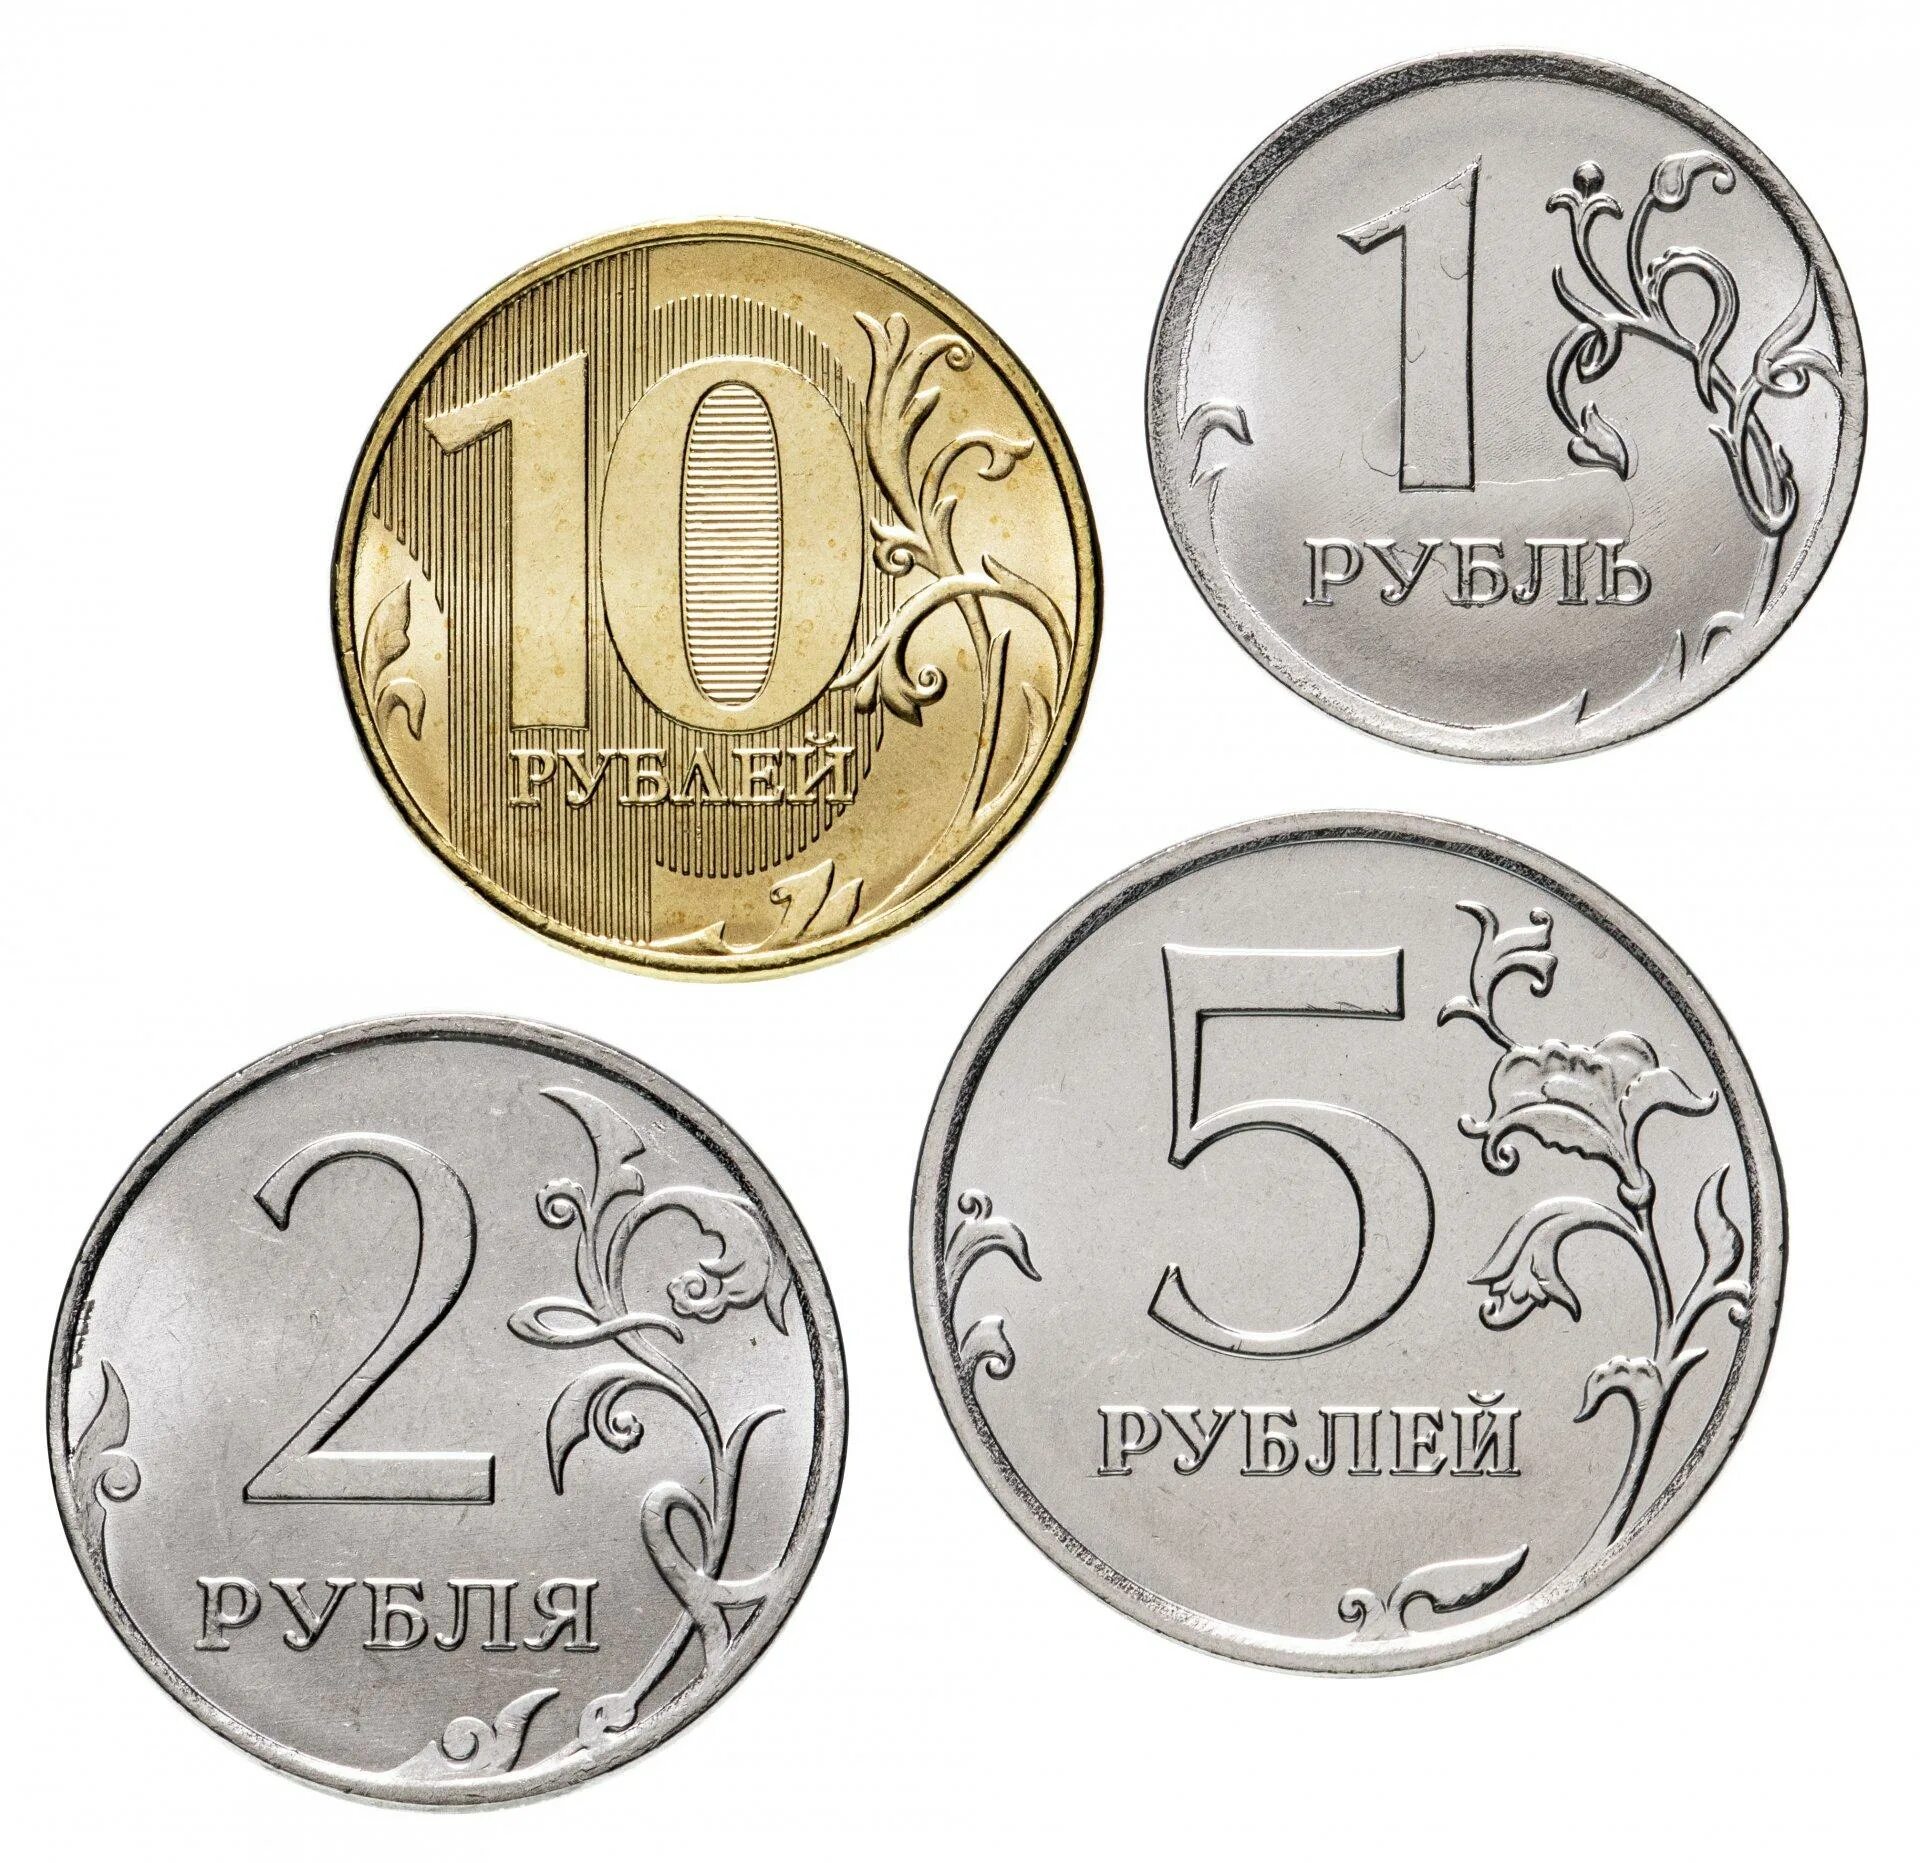 18 в рублях. Ходячка 2020 монеты. 1 Рубль Монетка 2020. Разменная монета 2020. Набор монет 2020 ходячка.